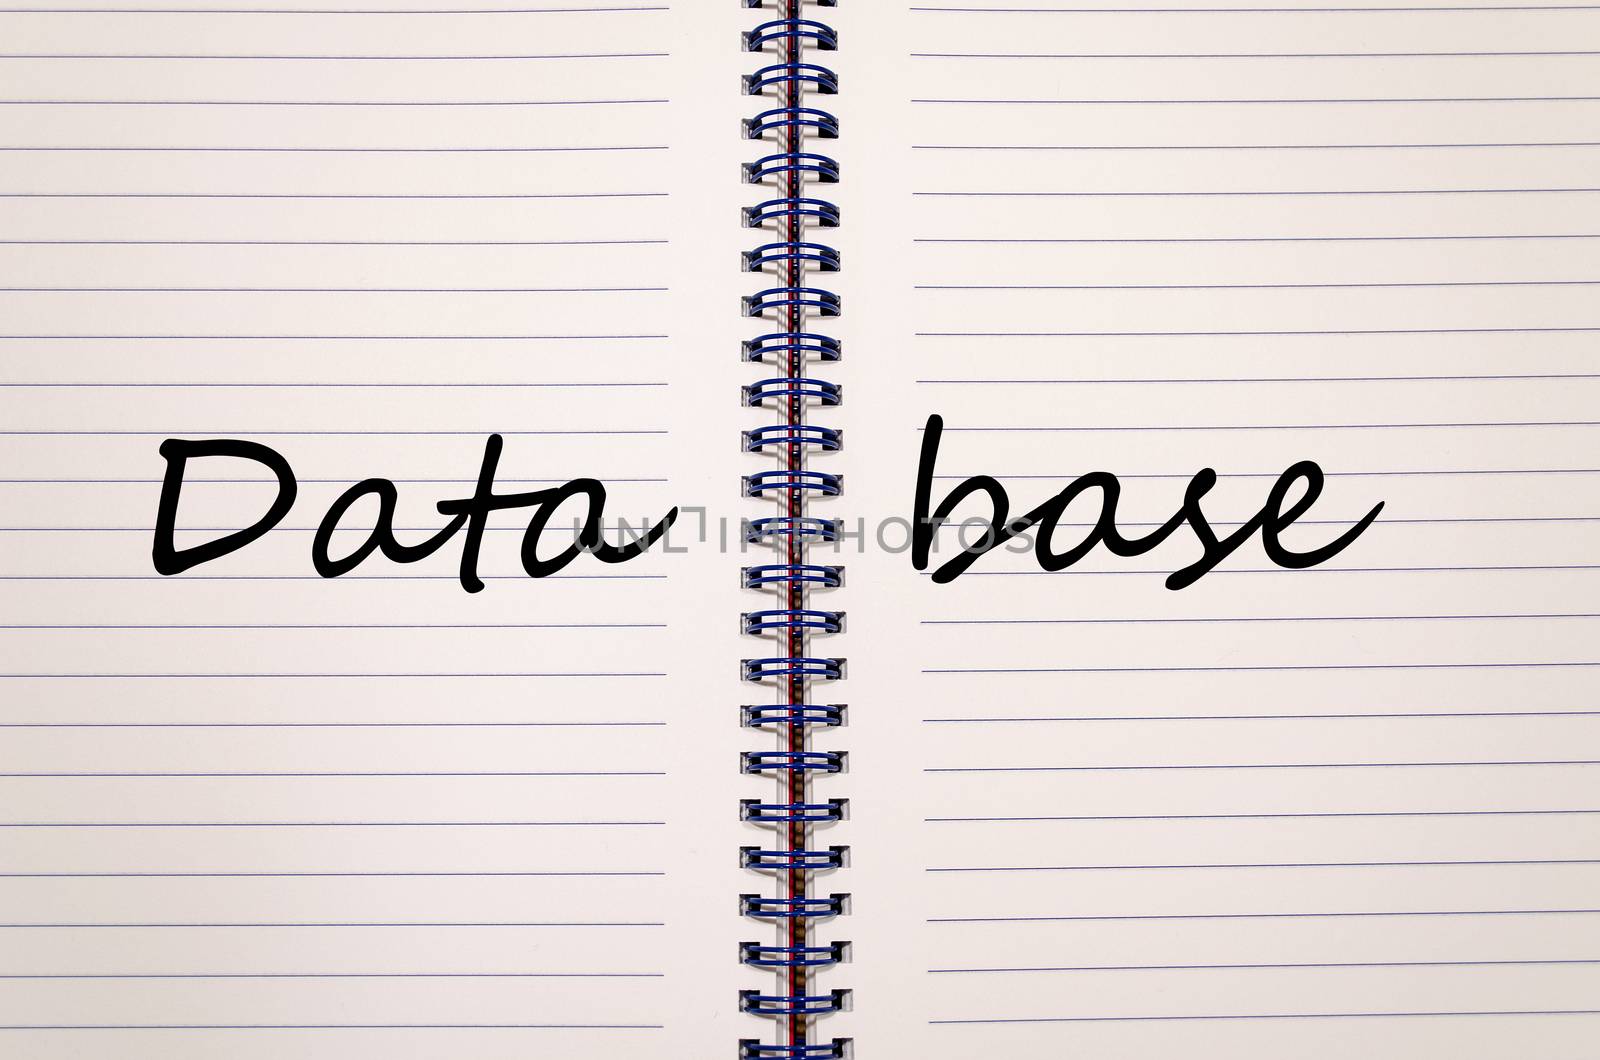 Database write on notebook by eenevski